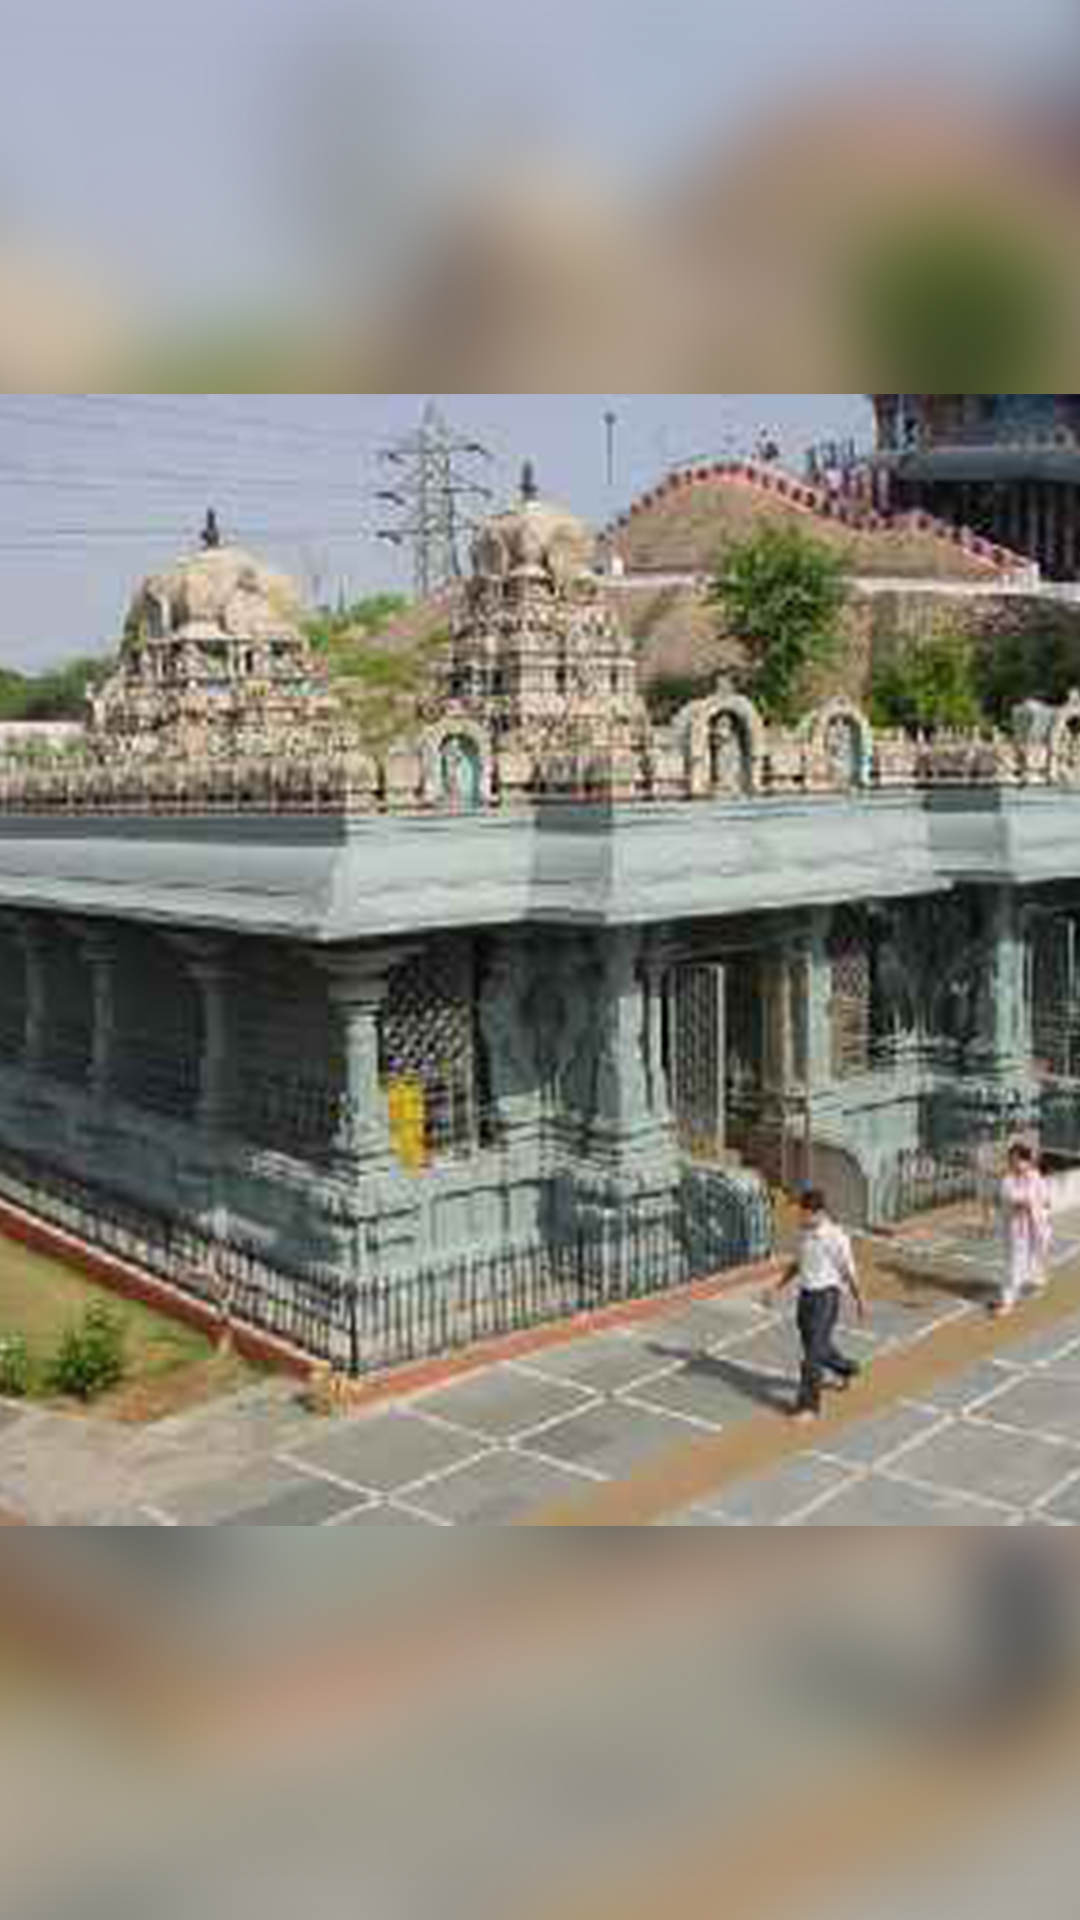 Why Delhi's Malai Temple in the news